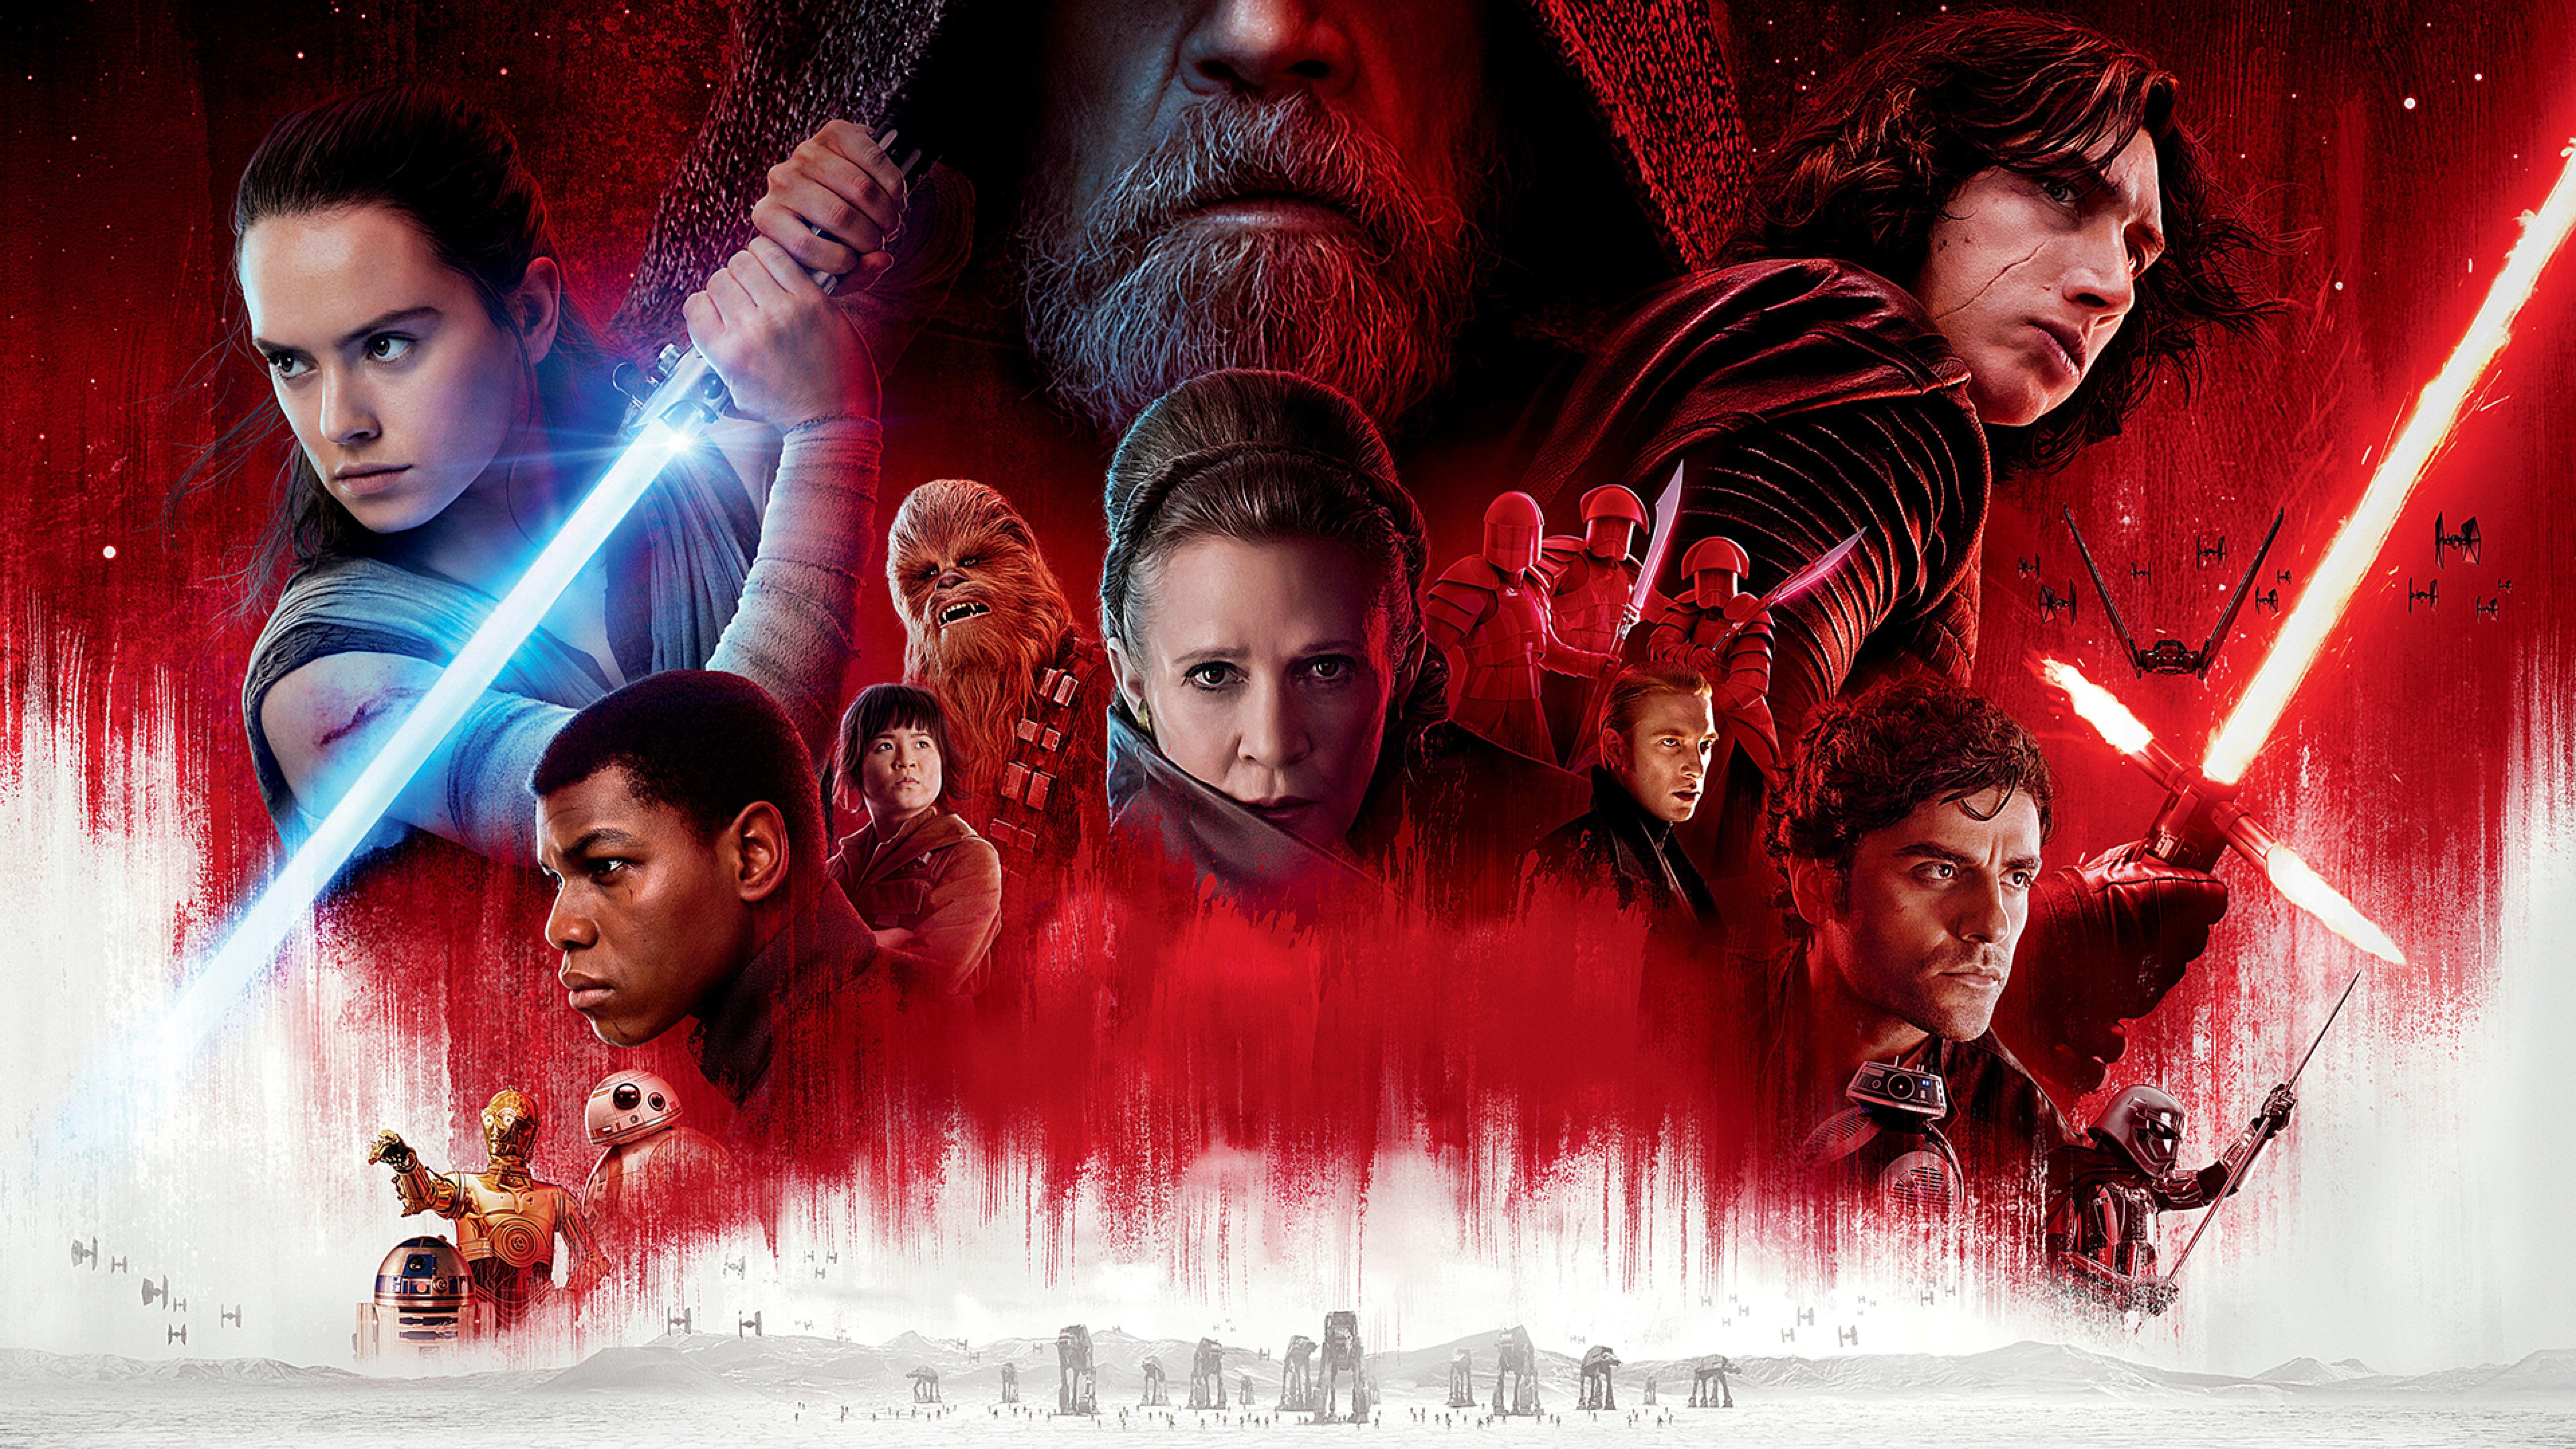 Download Star Wars 8 Cast Poster 7680x4320 Resolution, Full HD